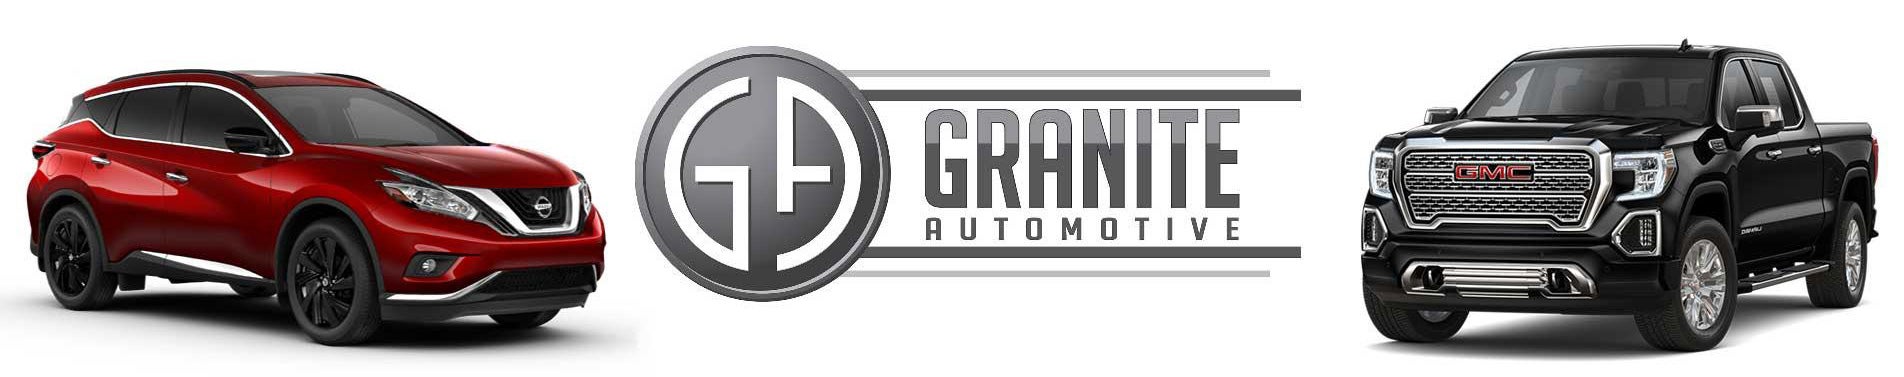 Granite Automotive in Rapid City SD